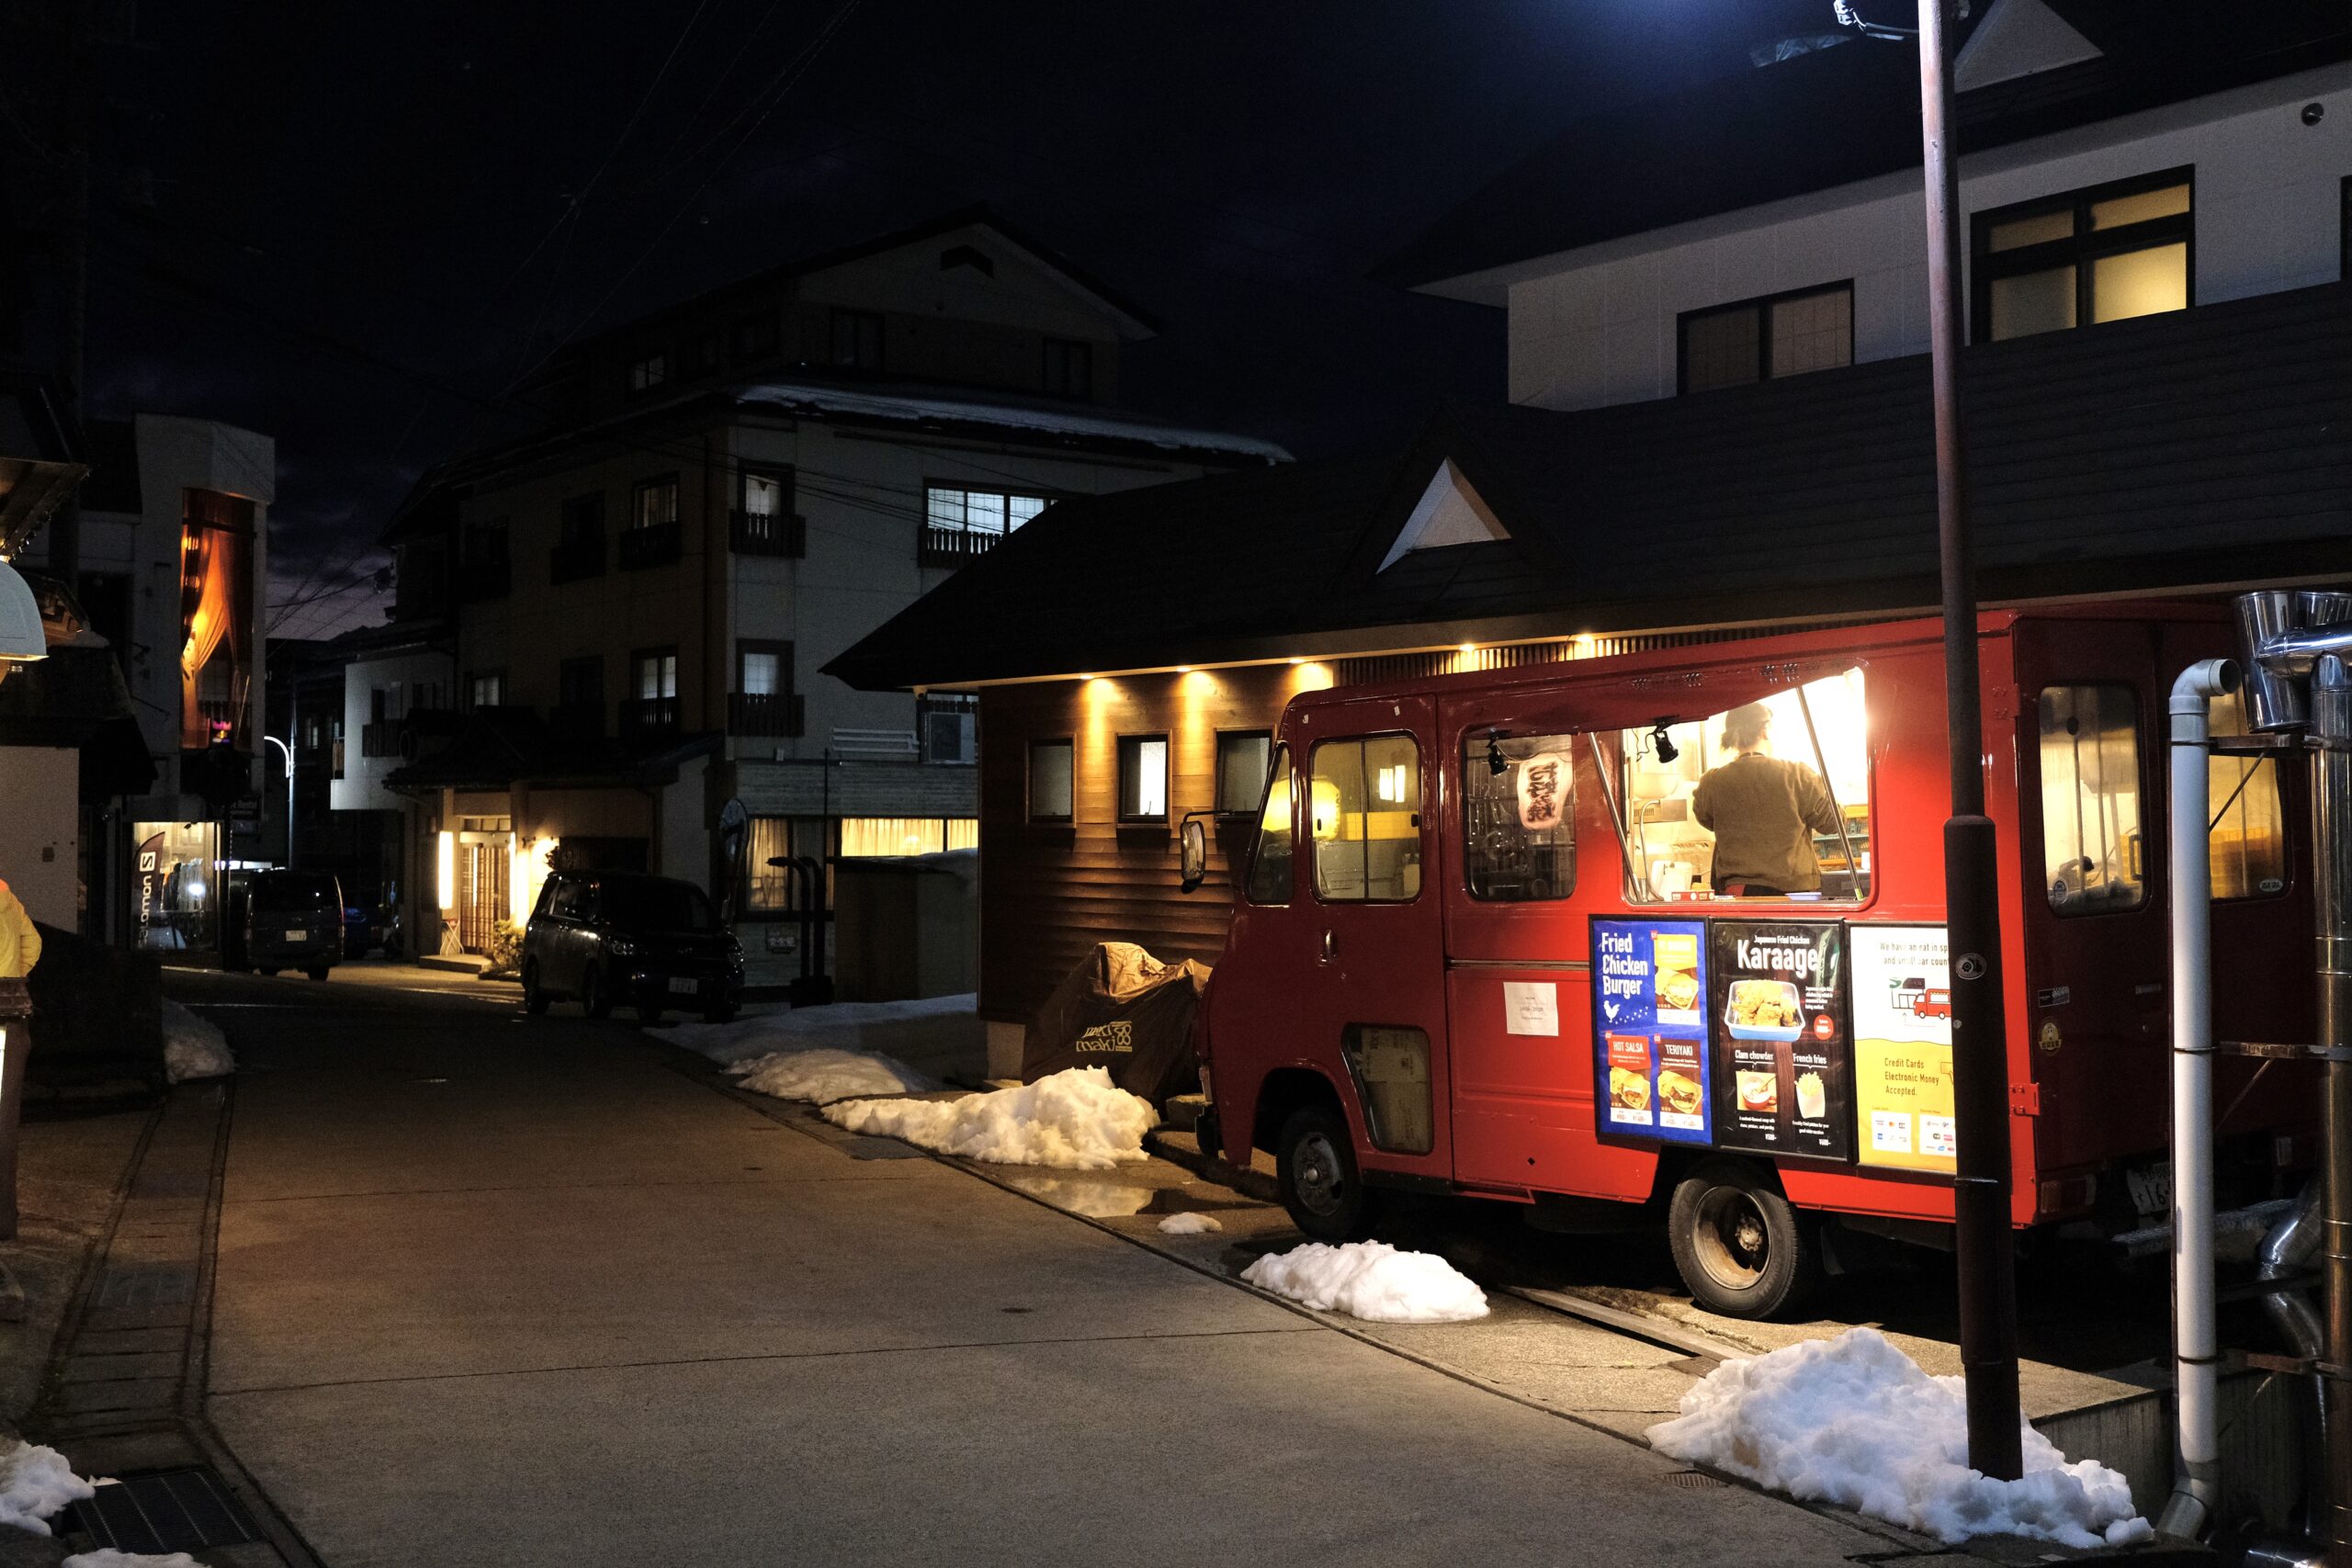 Food places in and around Nozawa Onsen